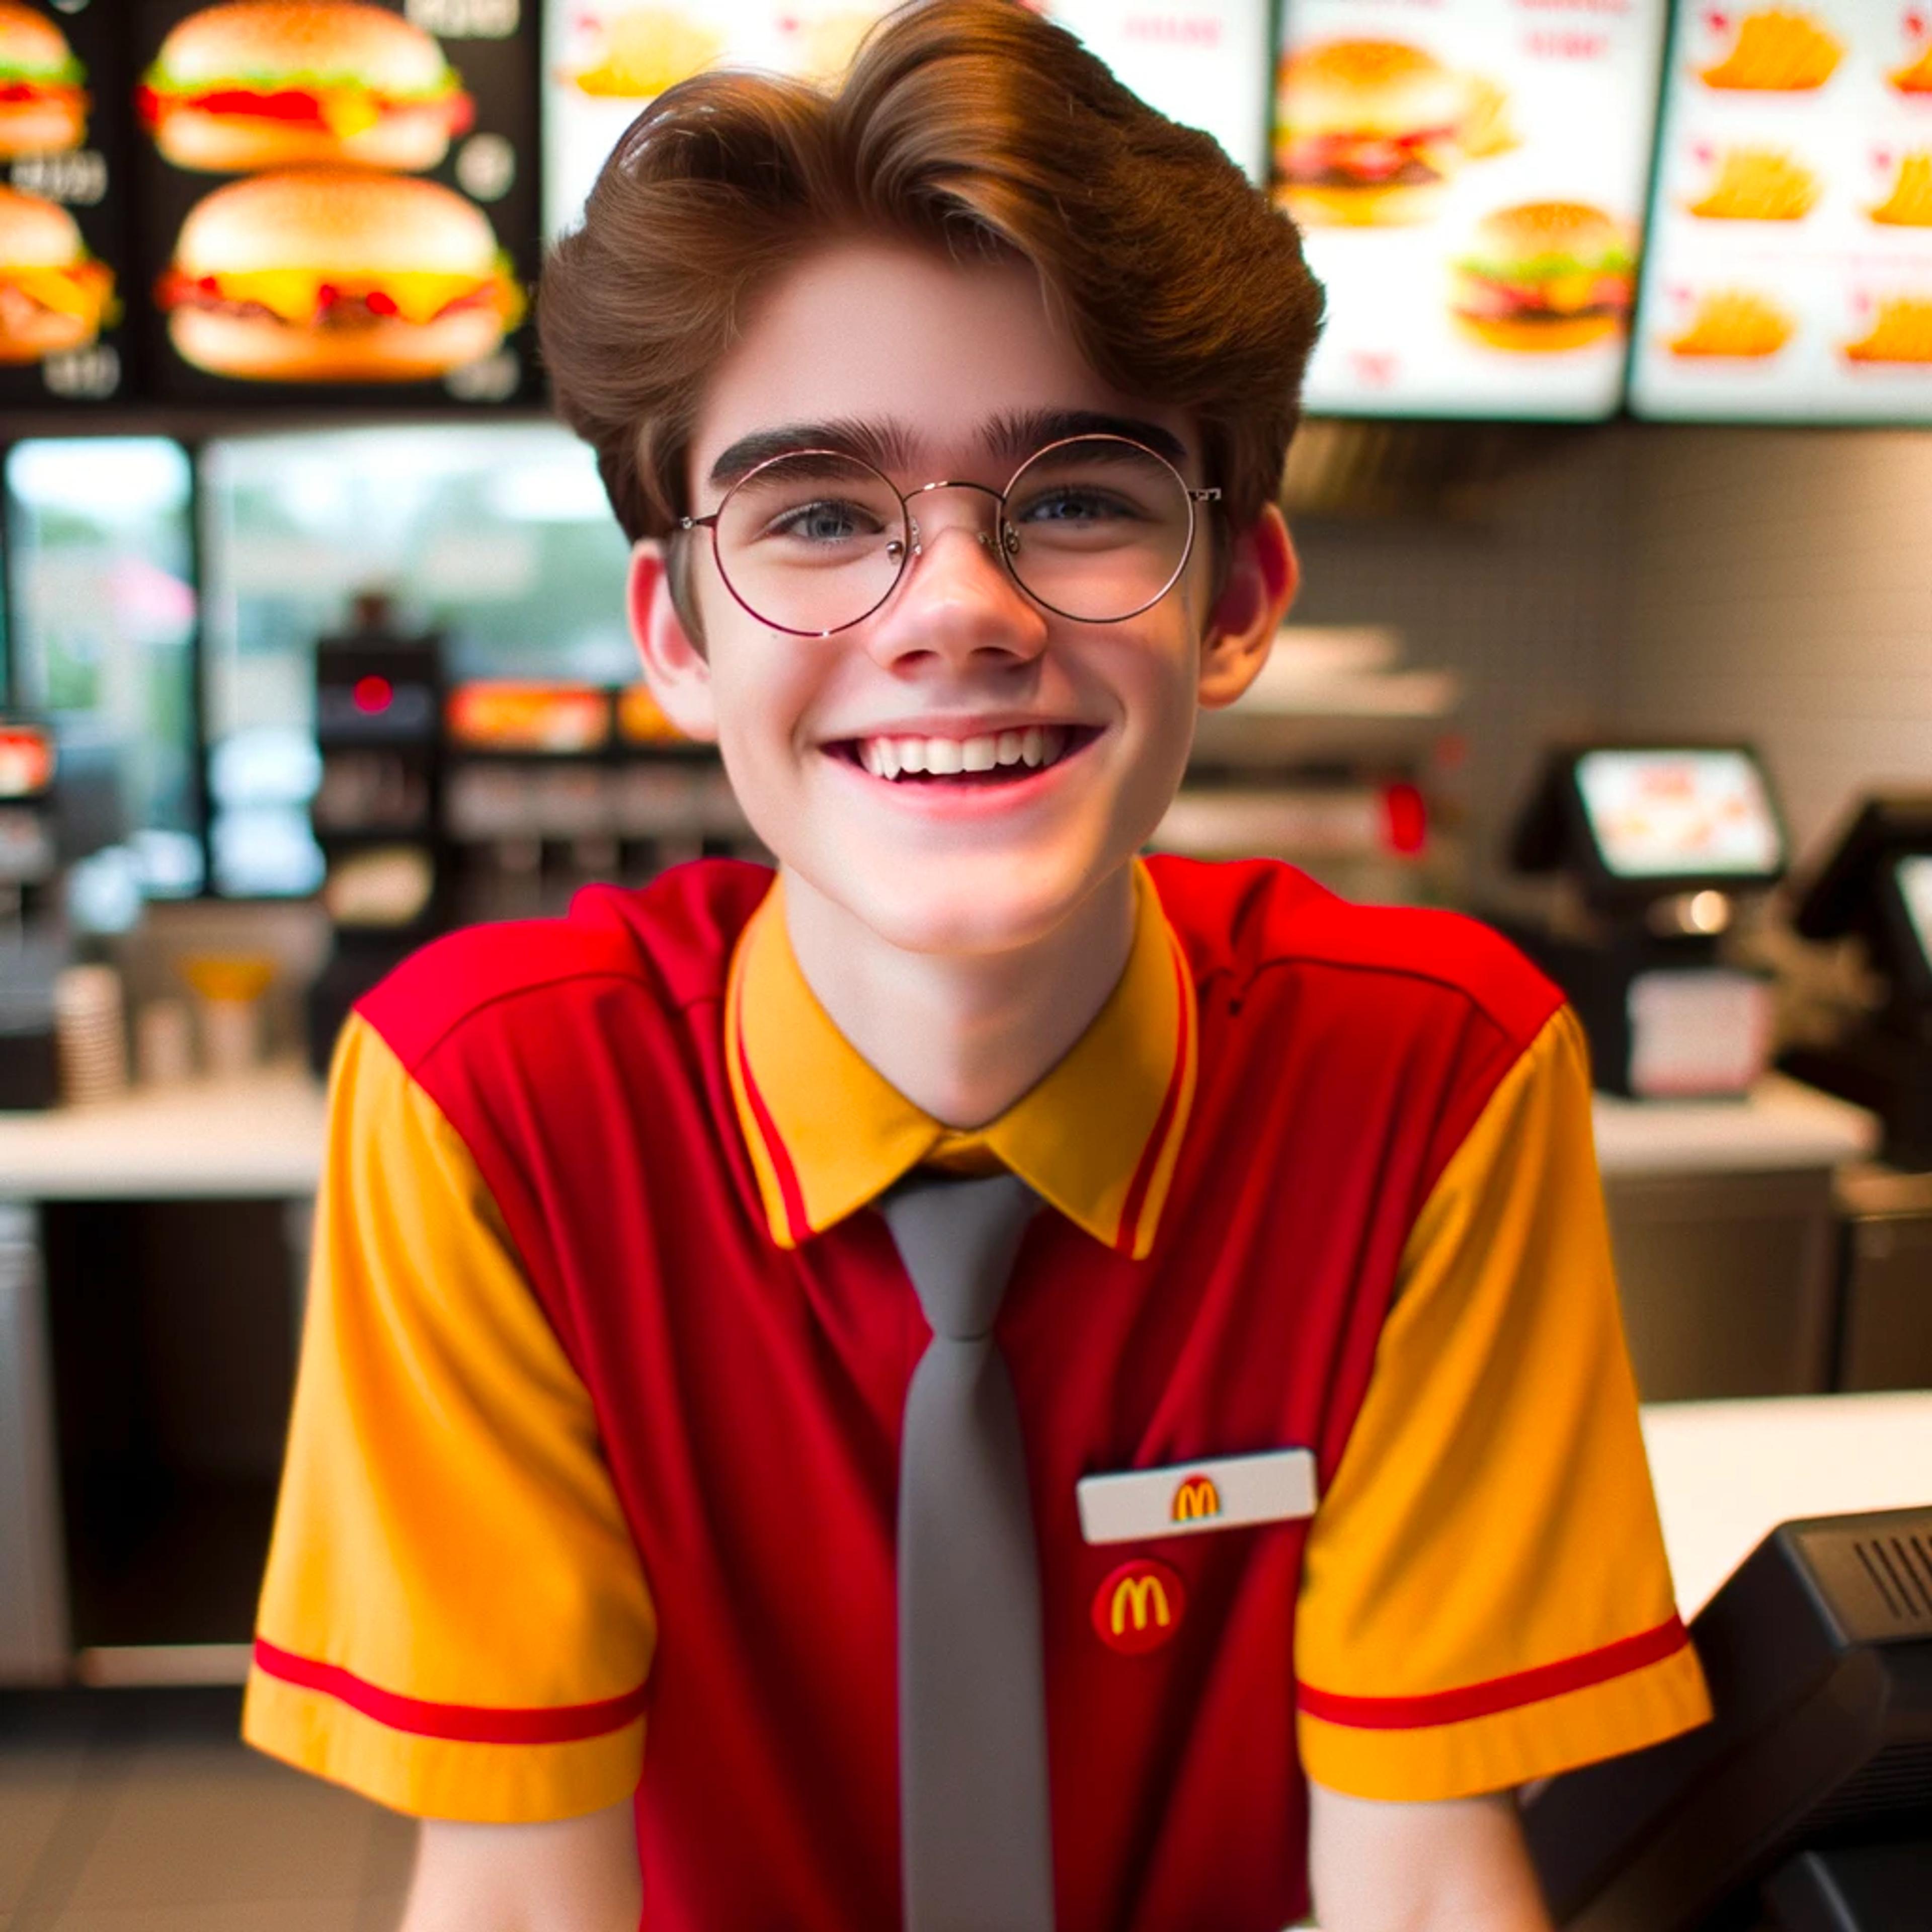 Teenager working at McDonald's.